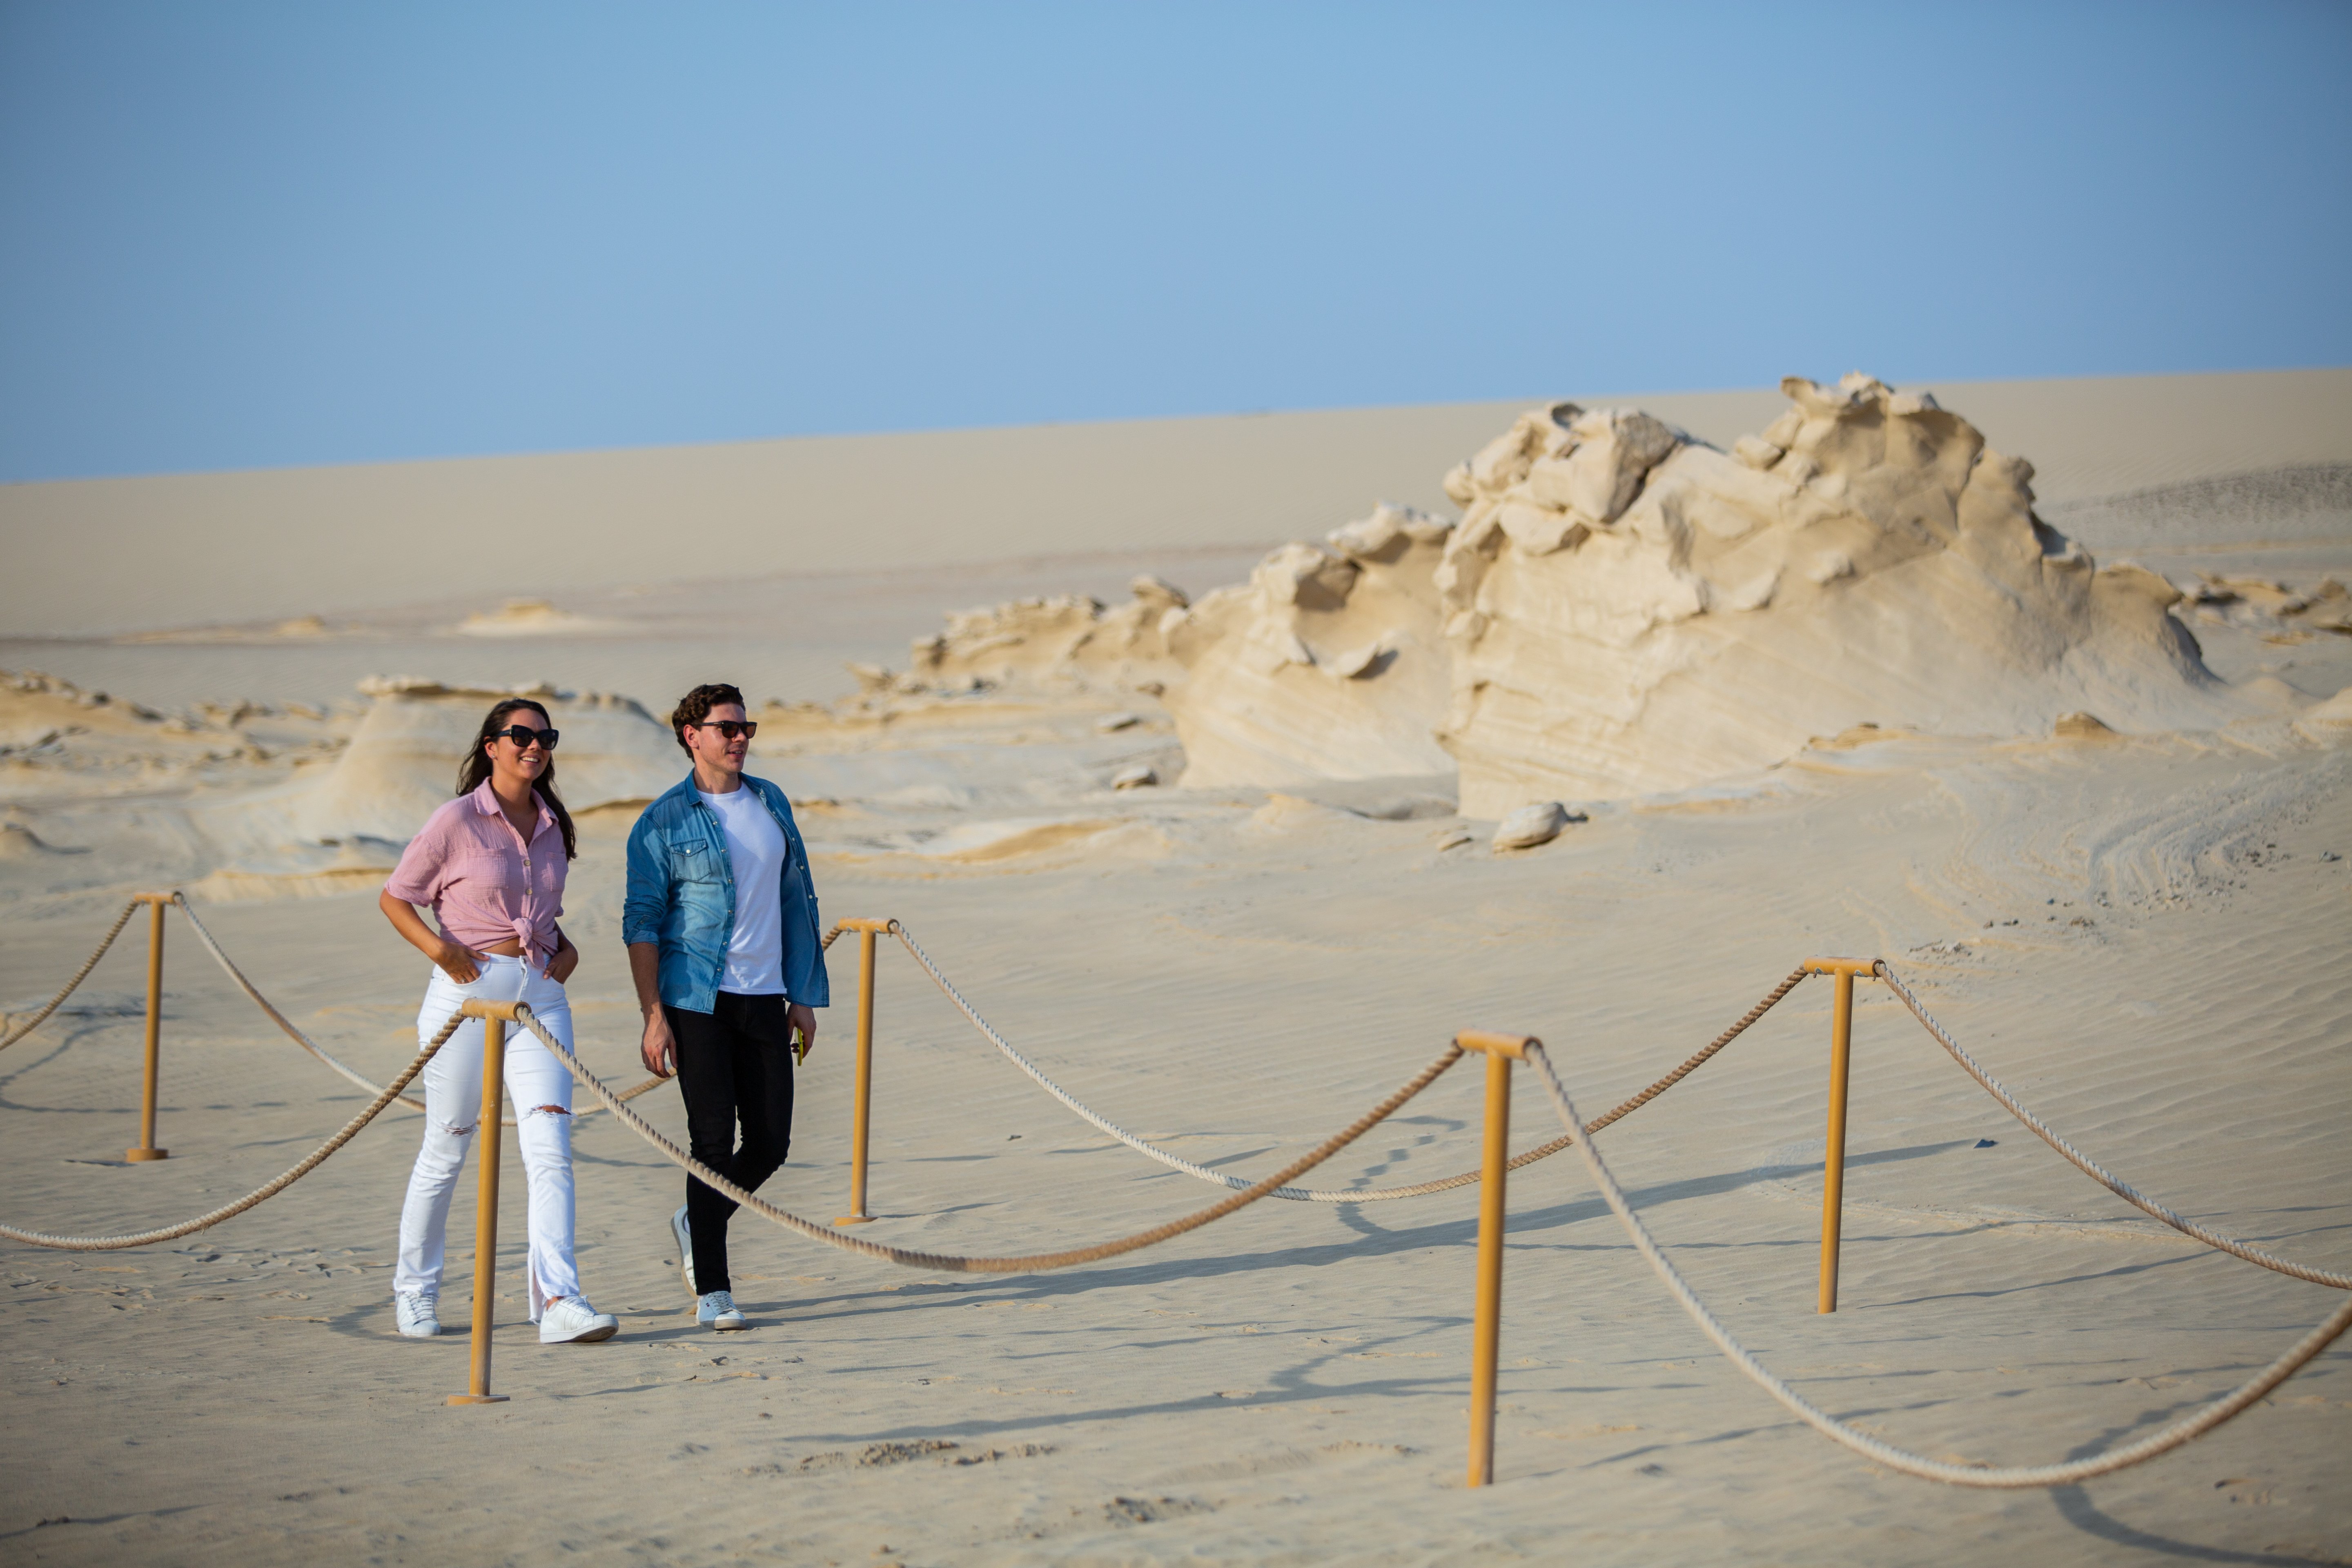 Al Wathba Fossil Dunes Reserve Tour